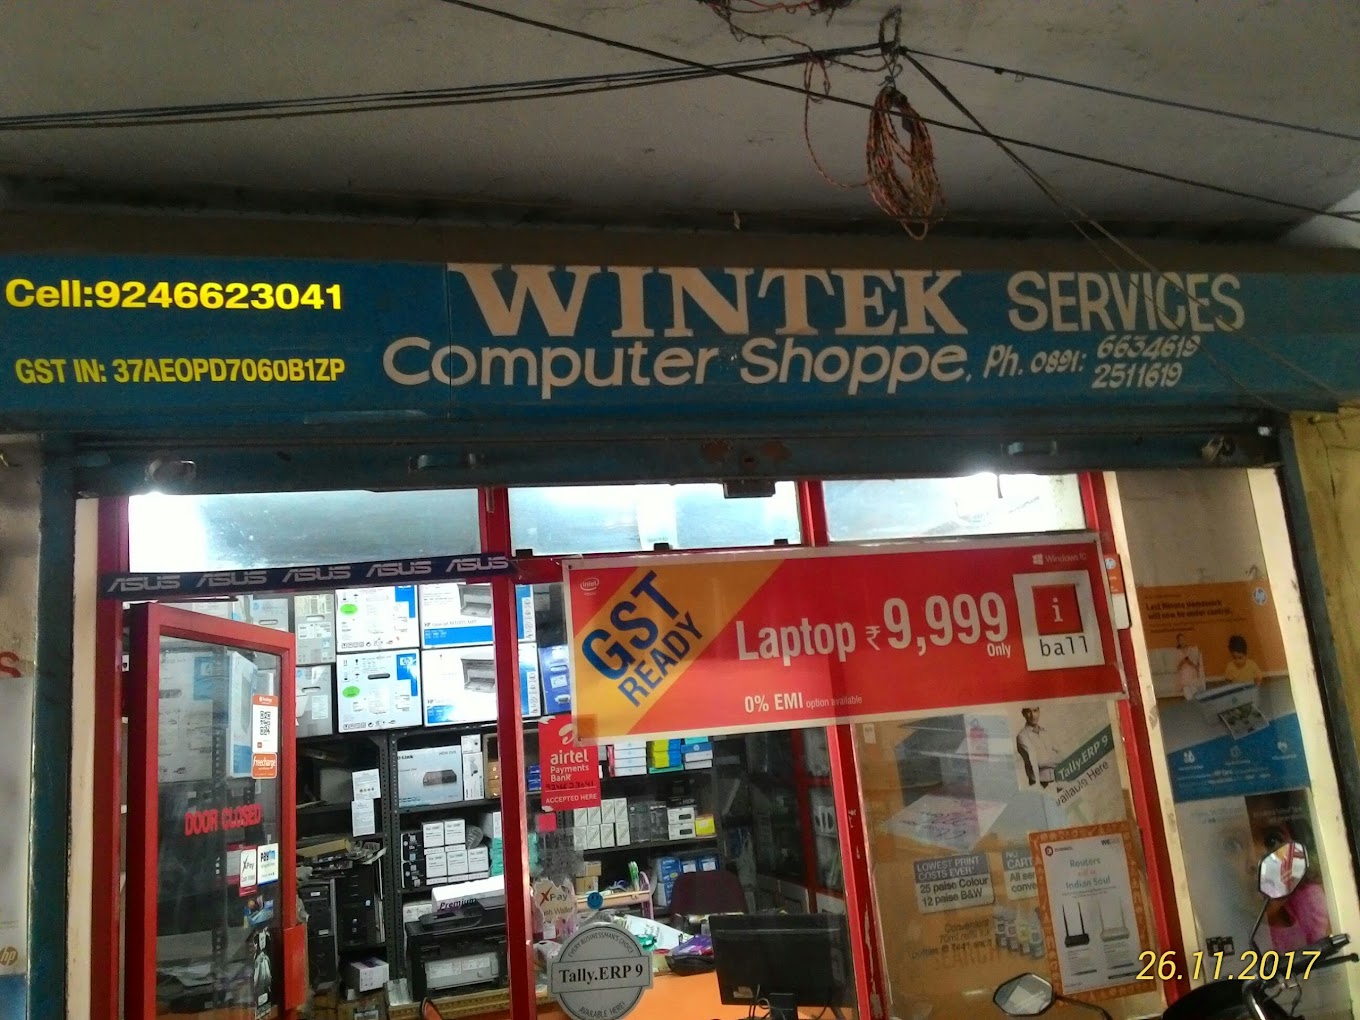 Wintek Services